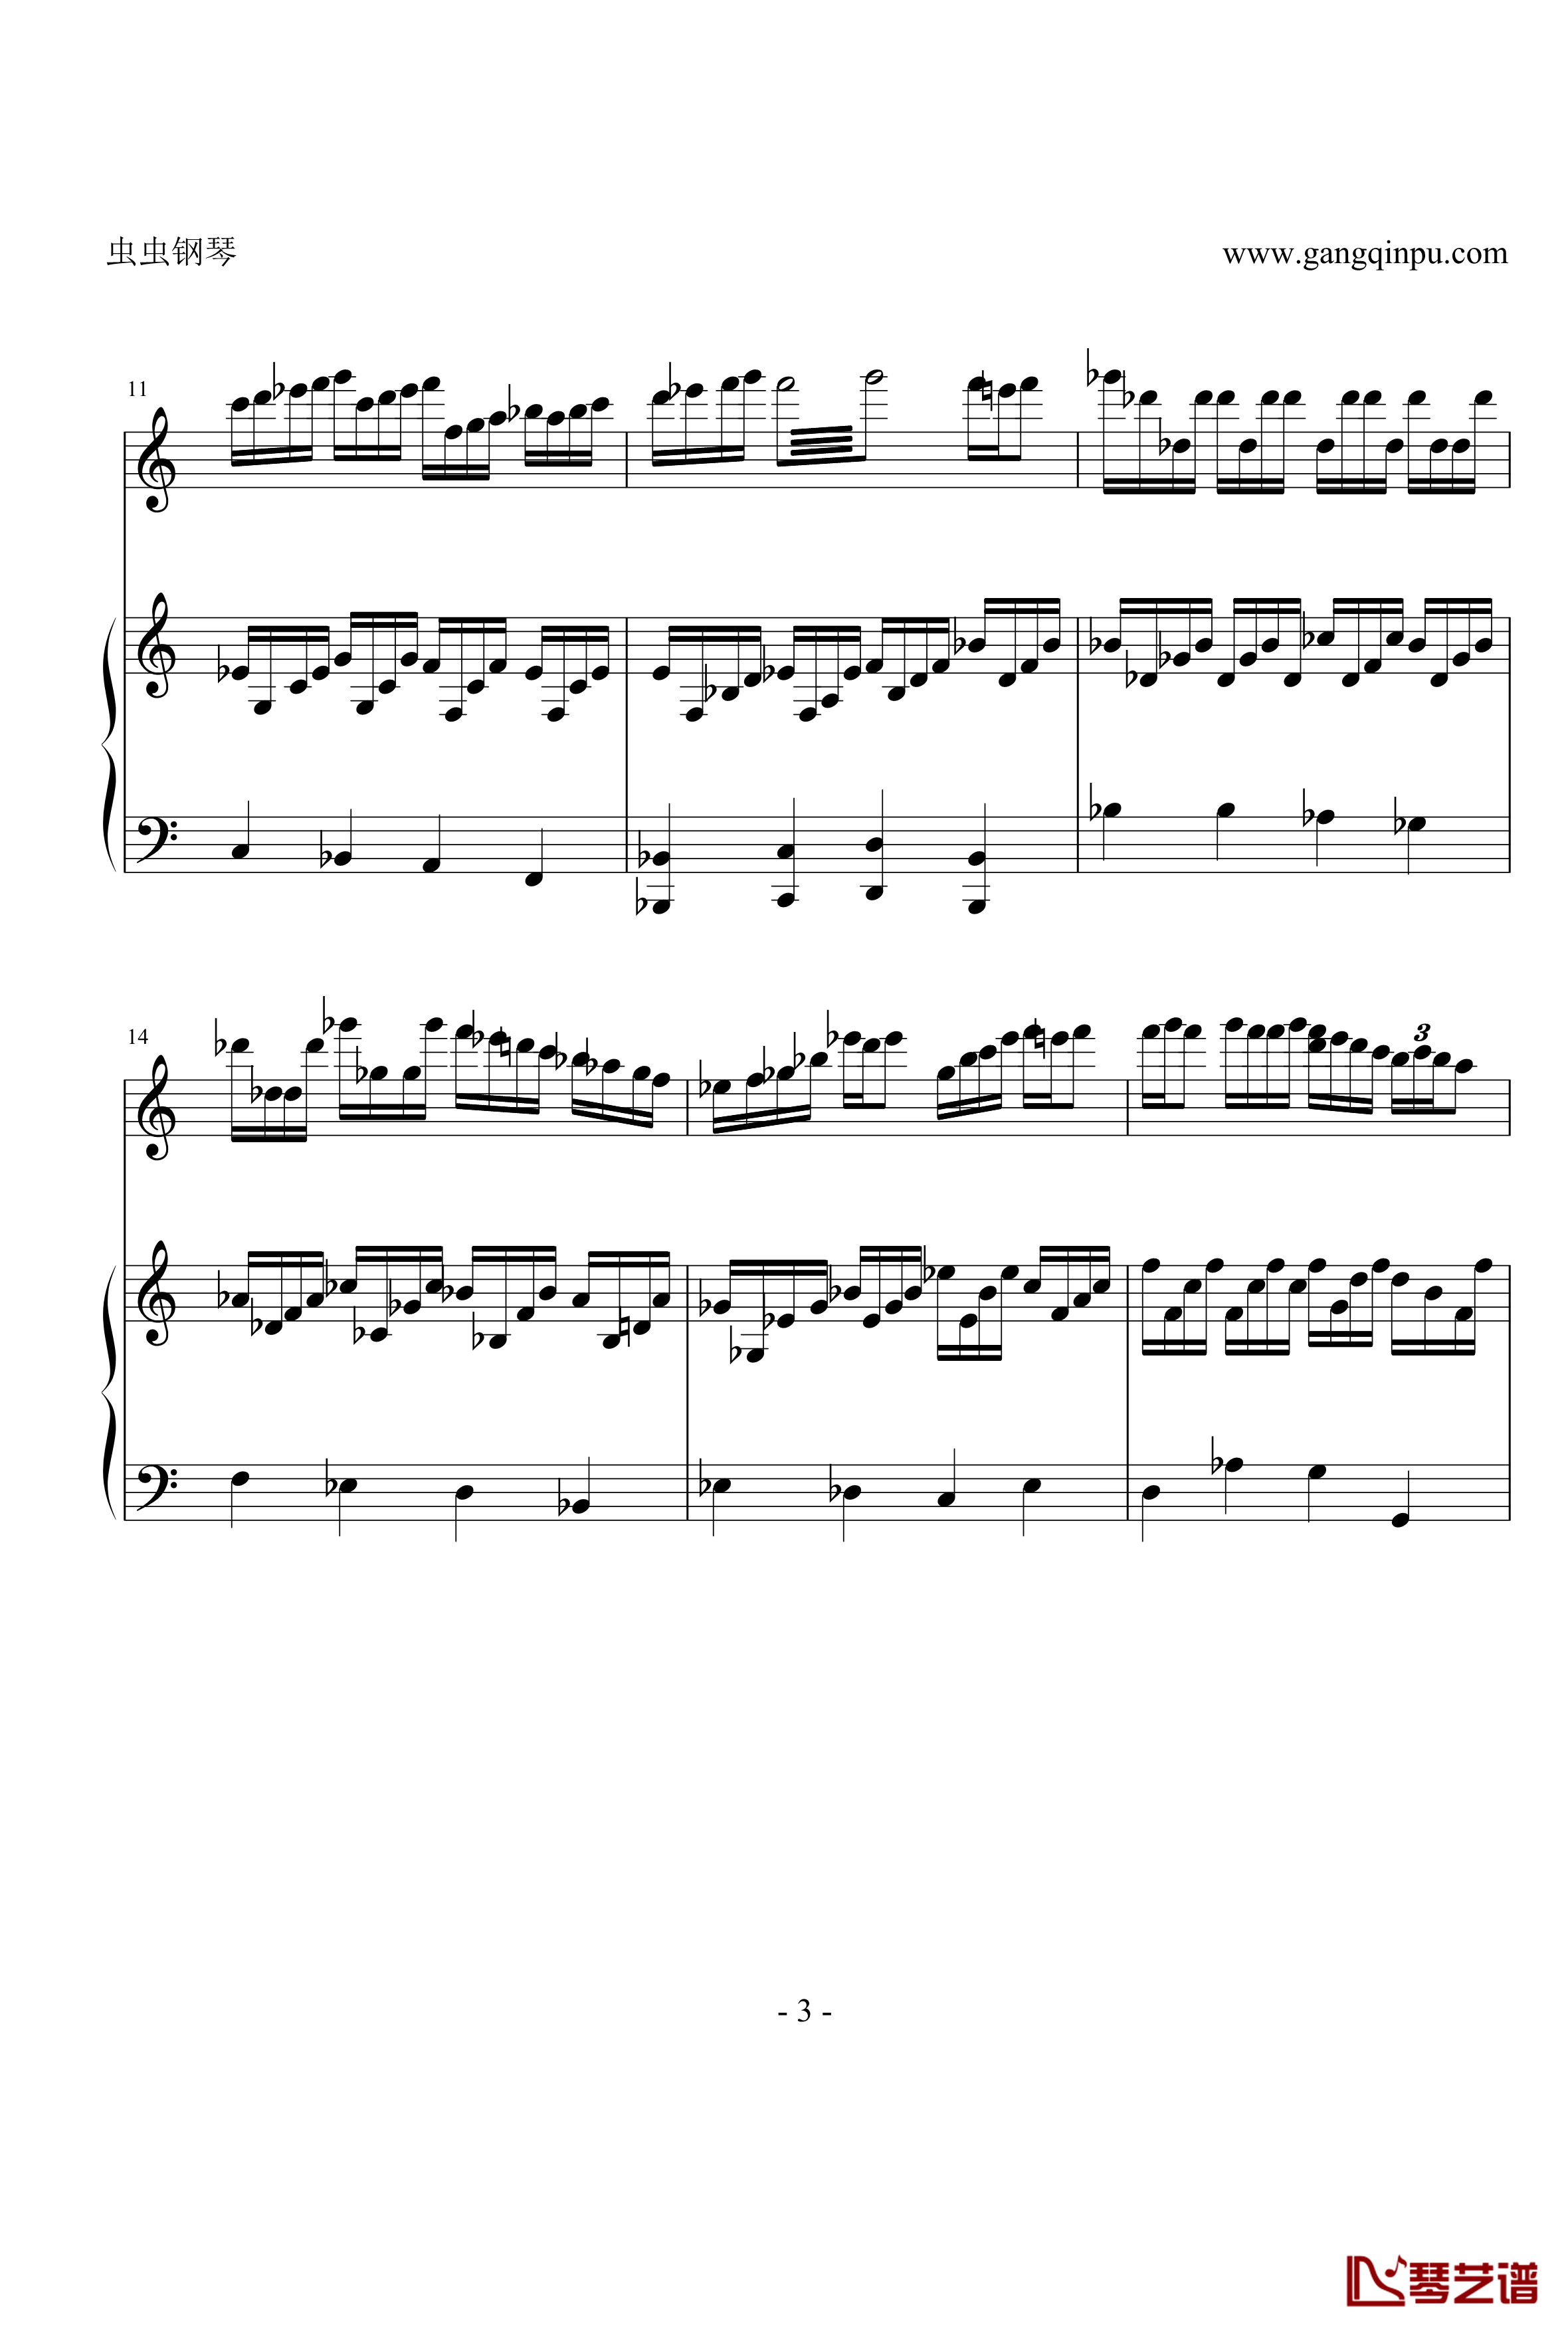 Study for Three Hands钢琴谱-海上钢琴师3